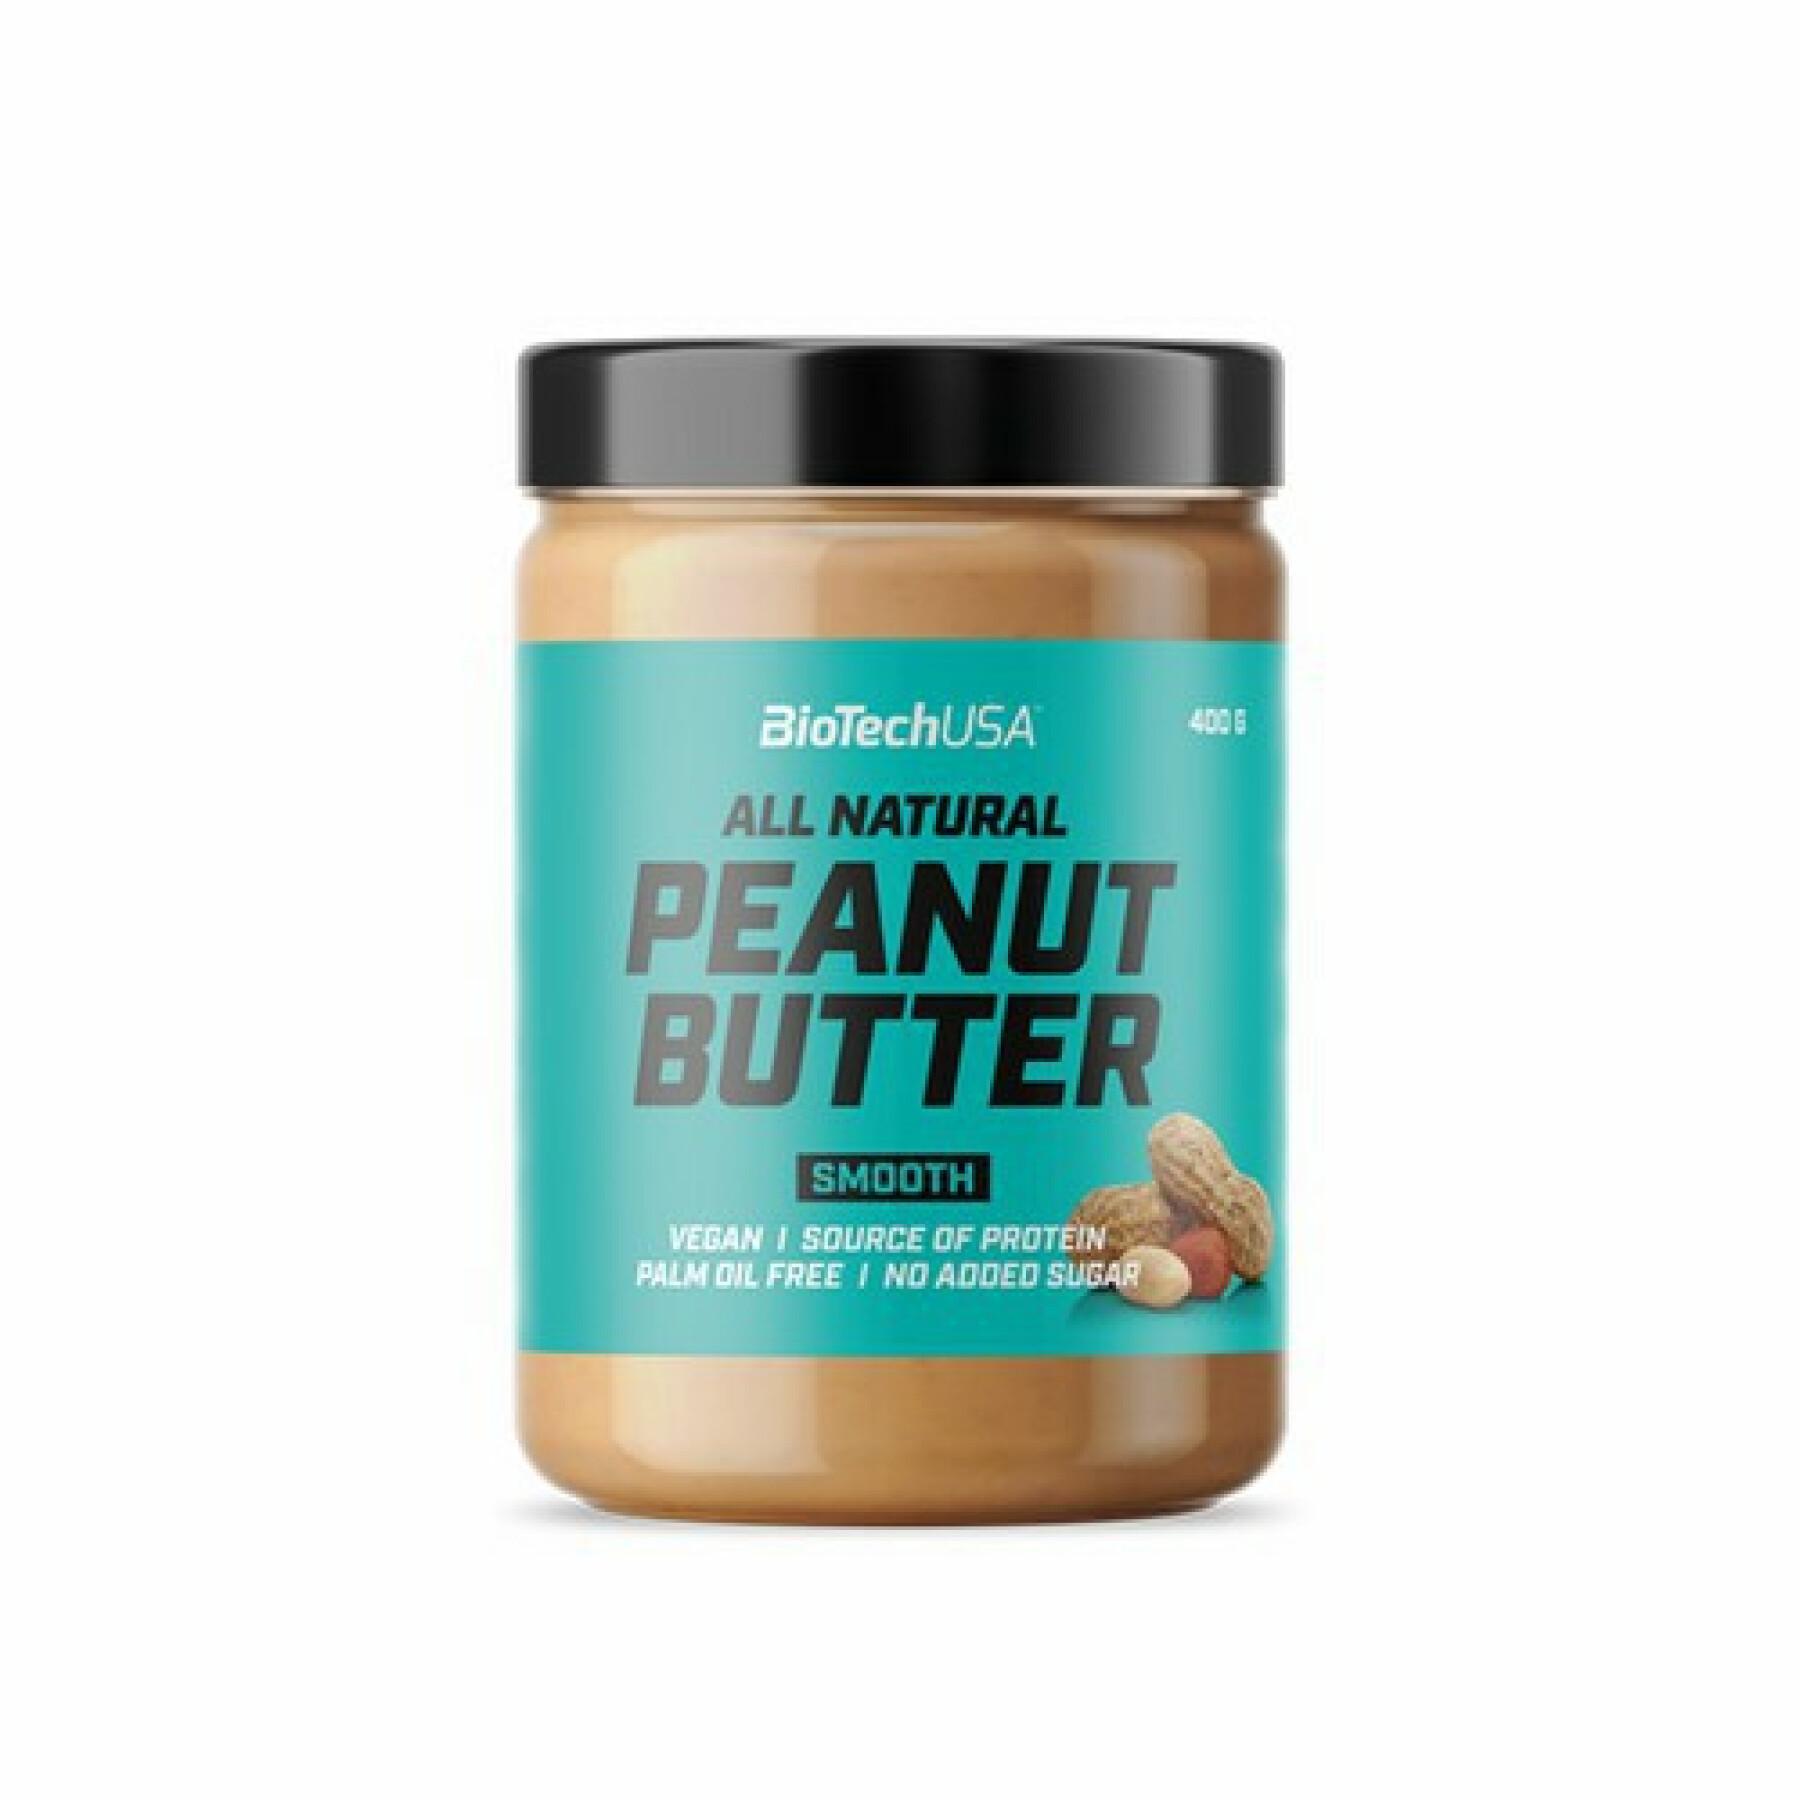 Lot of 15 buckets of peanut butter snacks Biotech USA - Crémeux - 400g